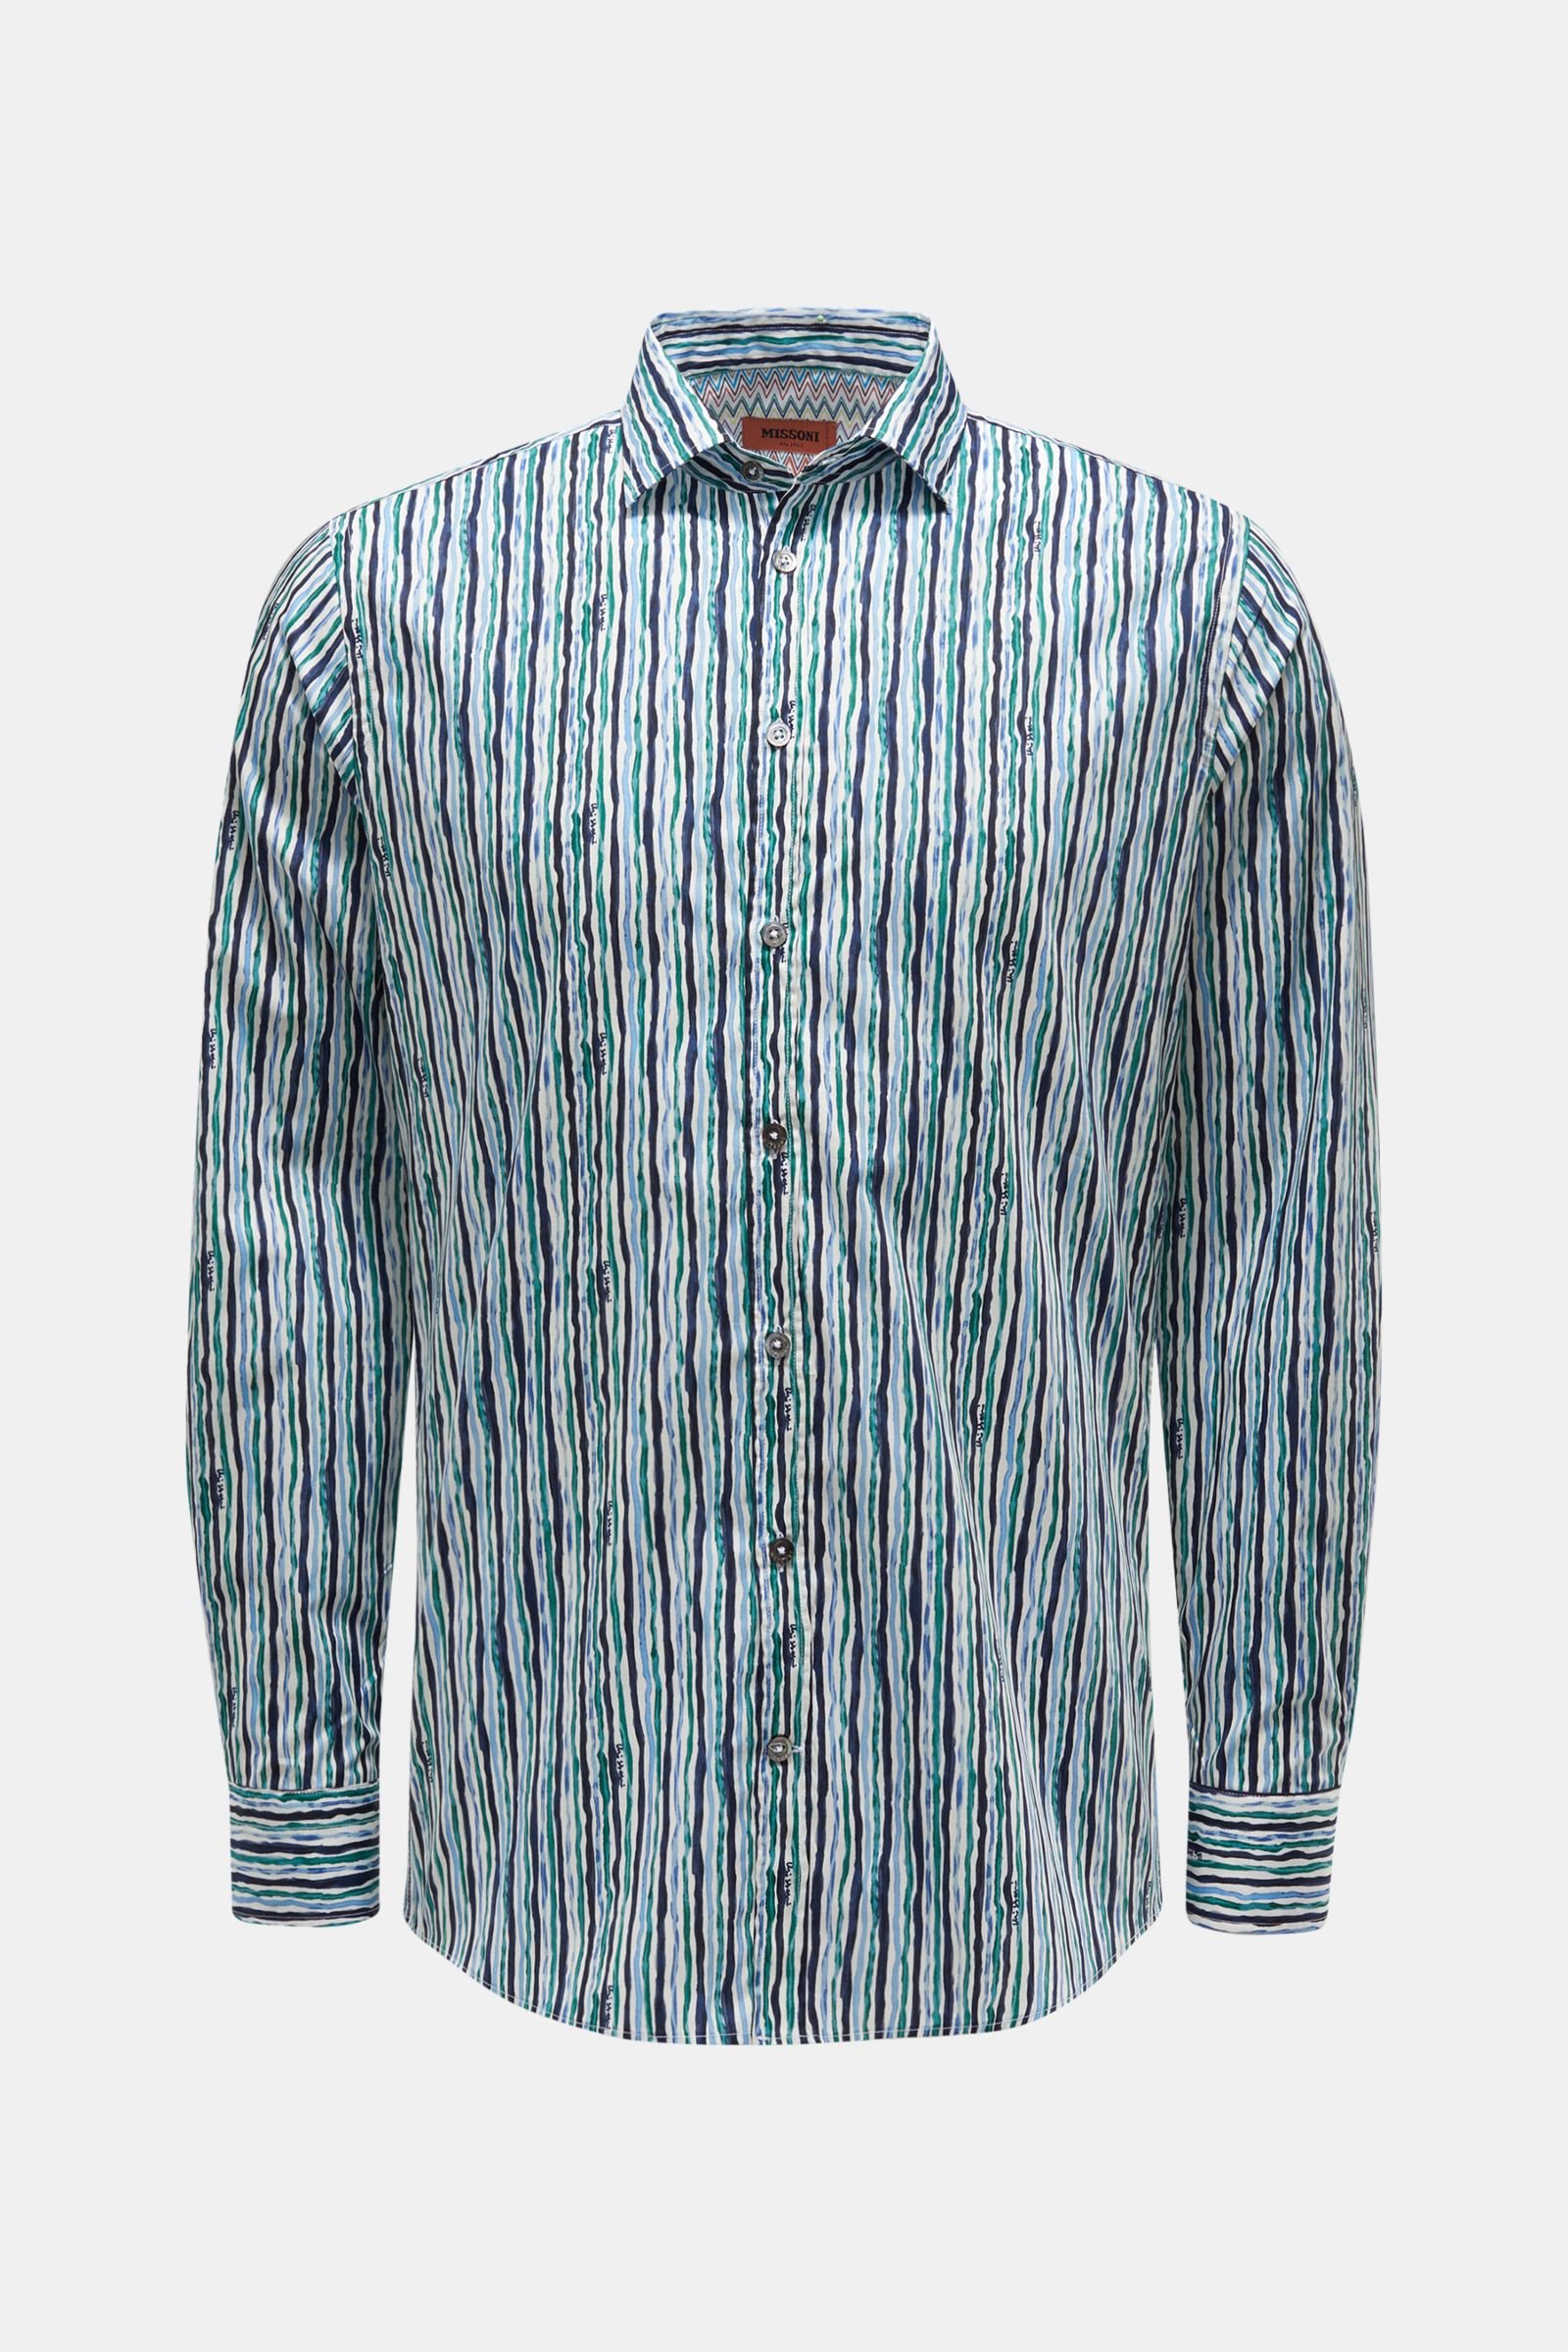 Casual shirt slim collar grey green/light blue striped